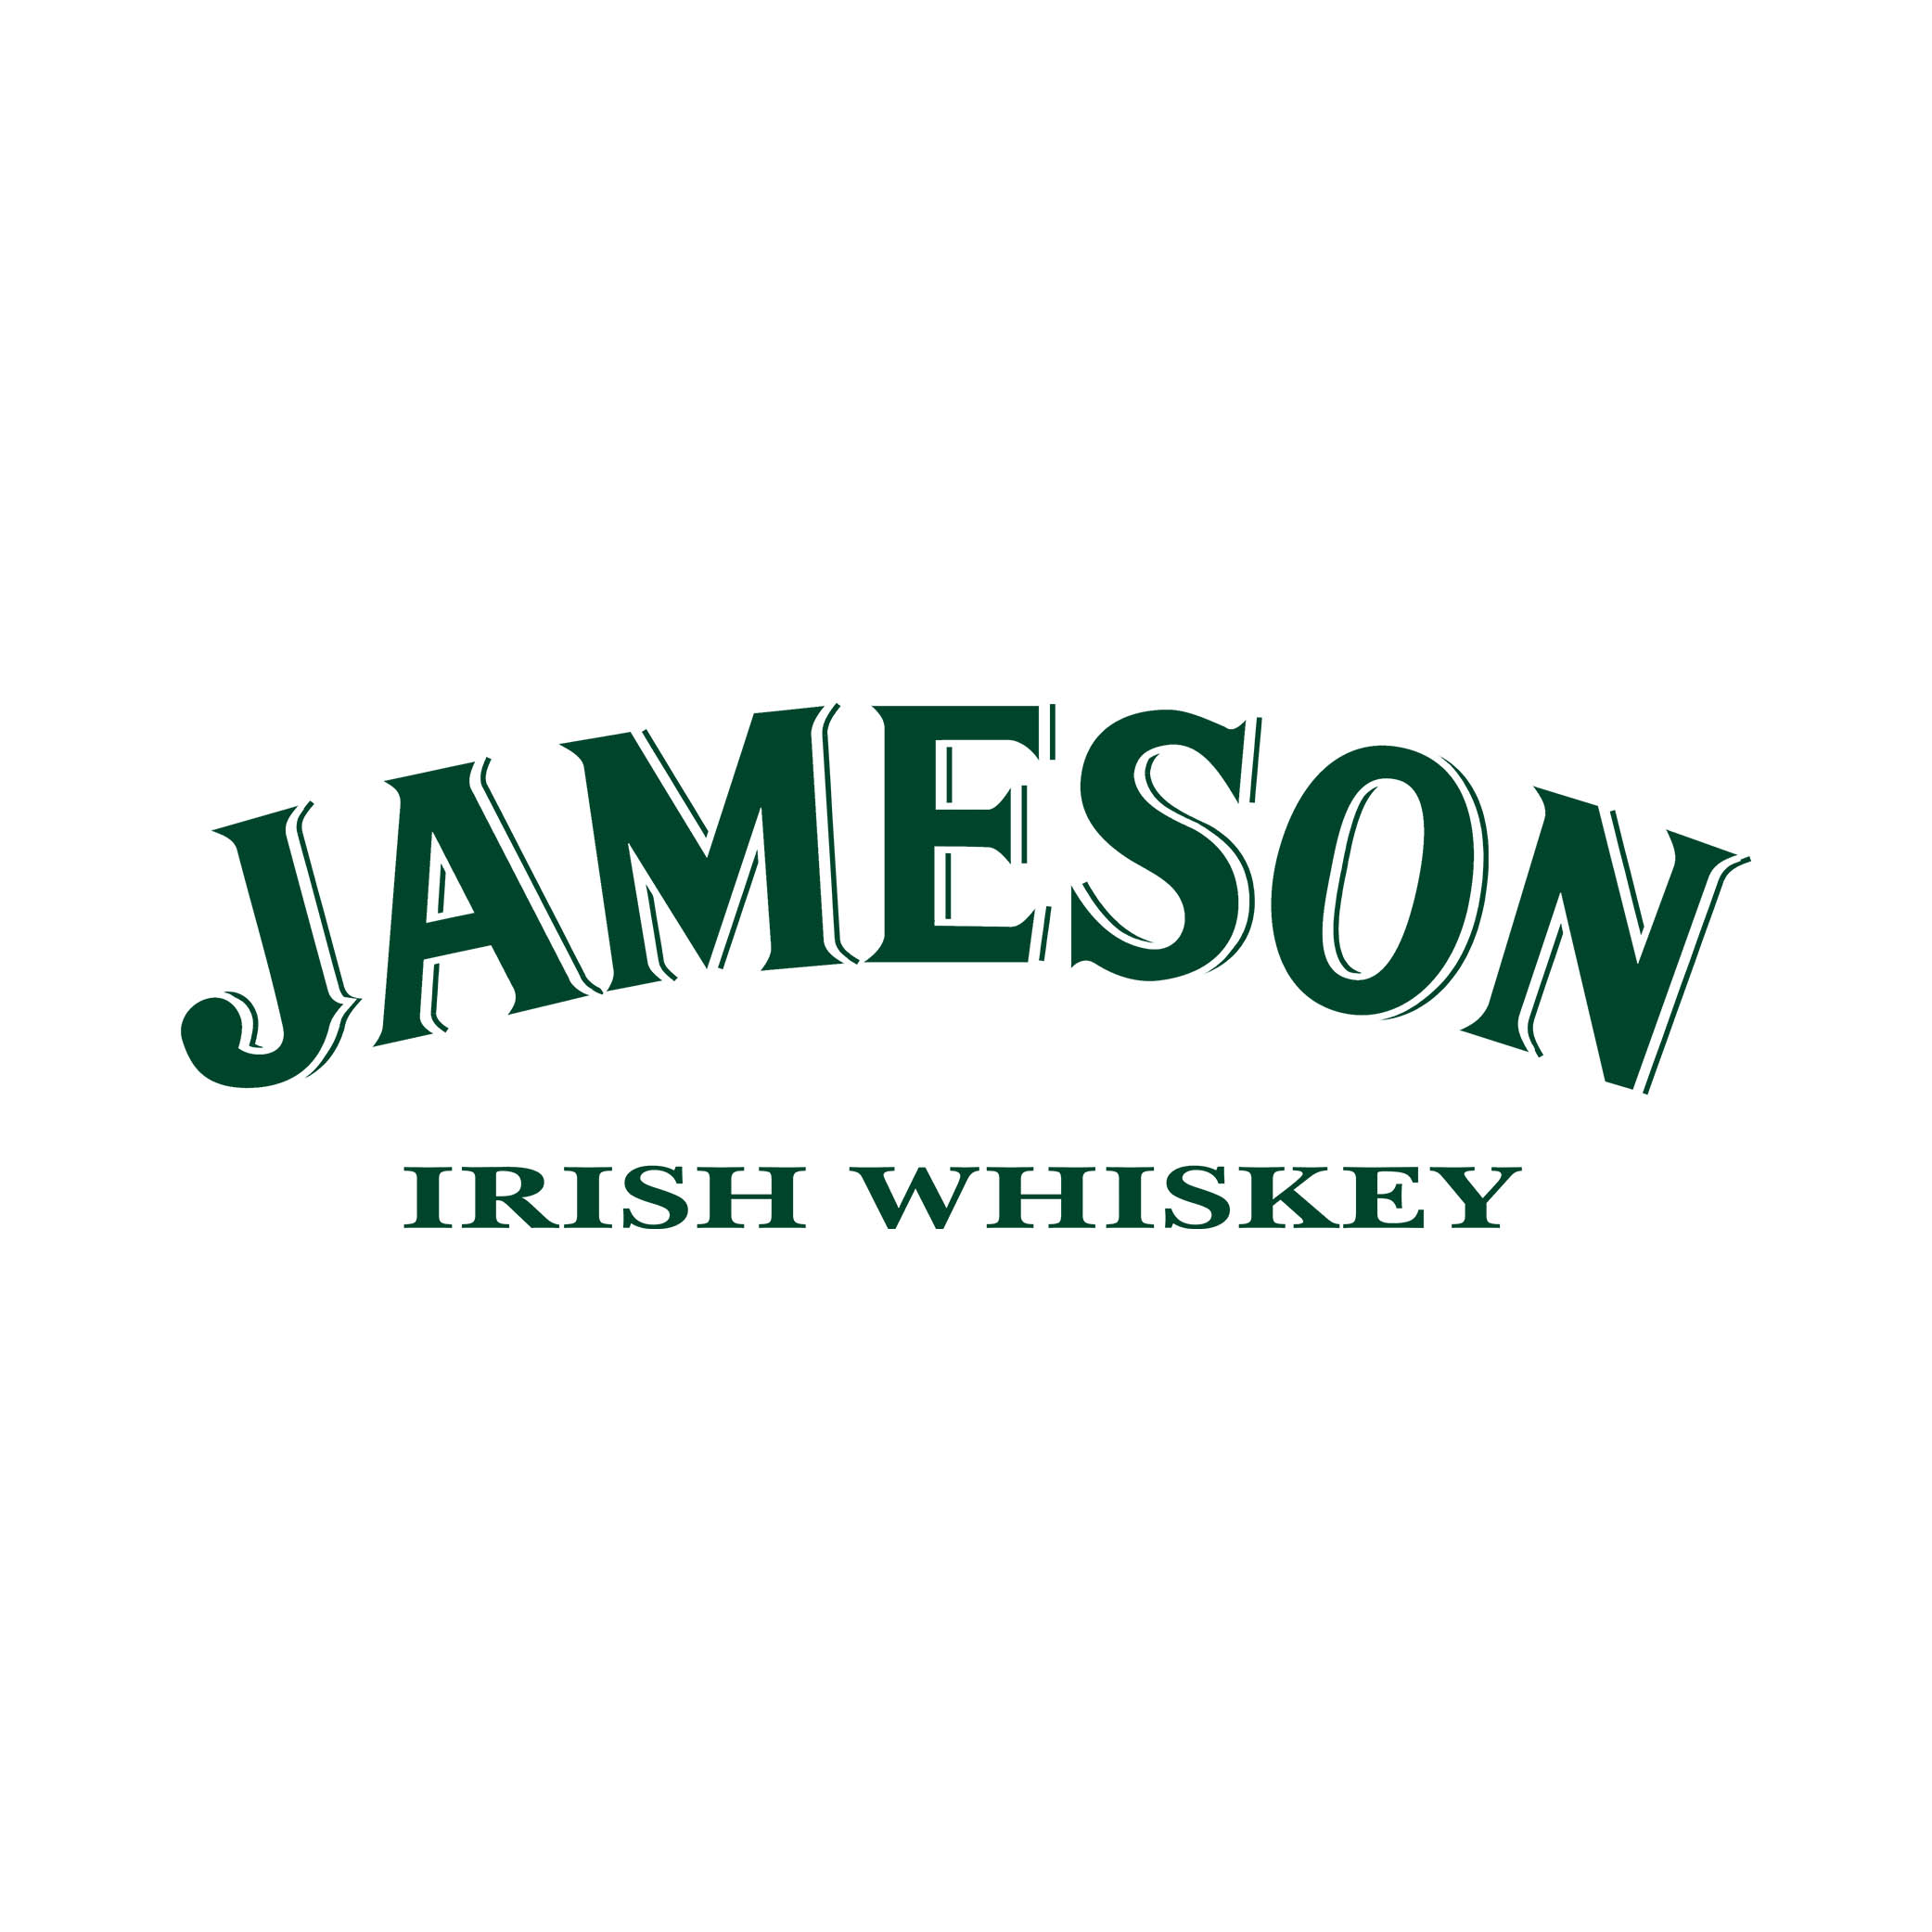 Pancaniaga Indoperkasa - Jameson Irish Whiskey